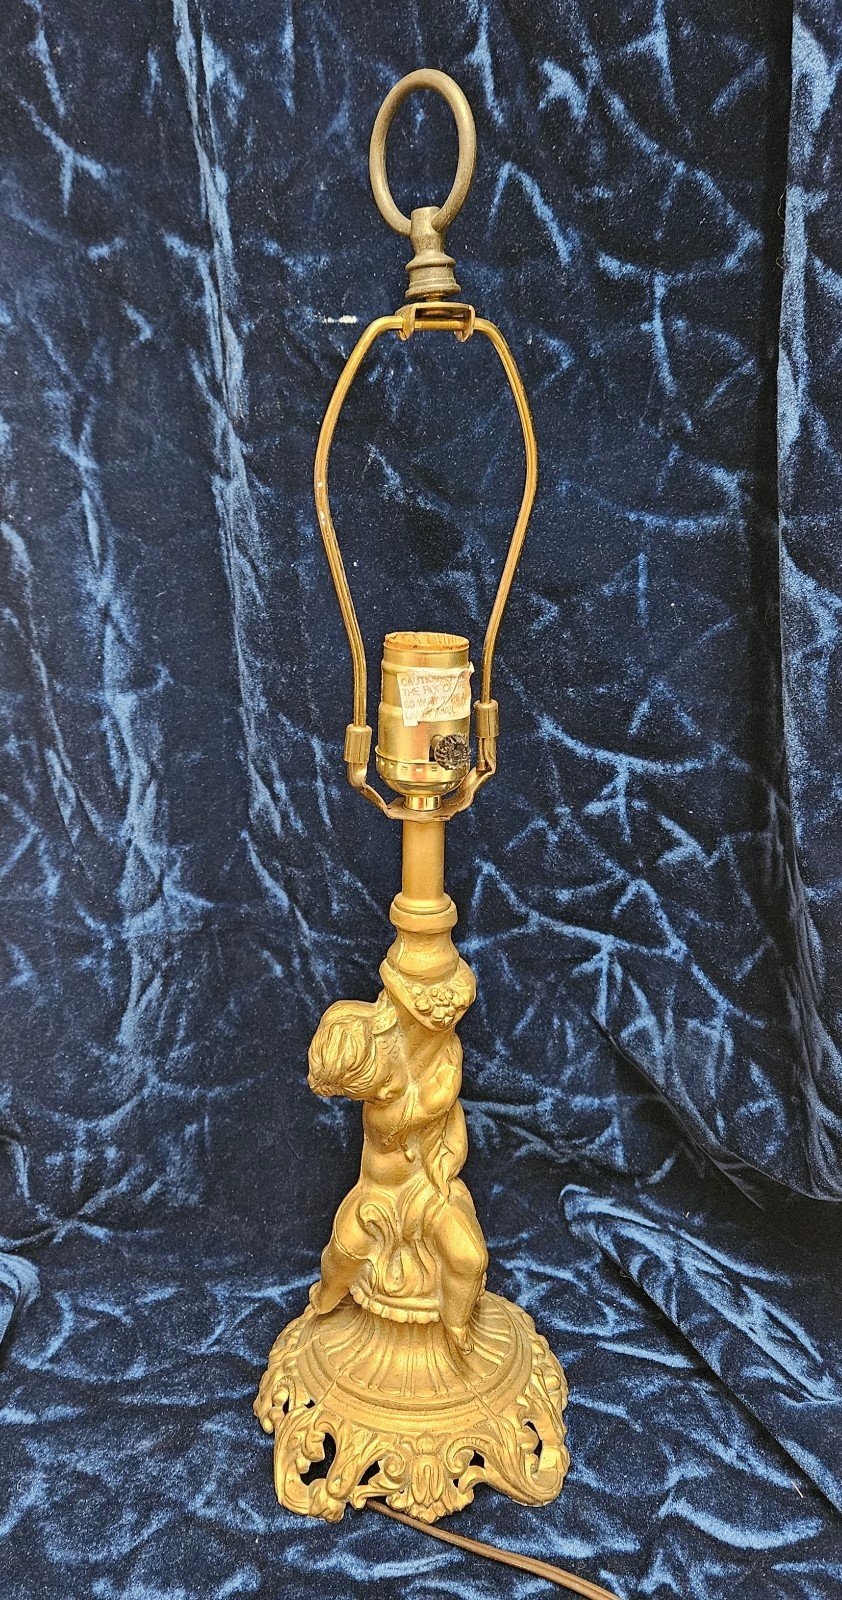 Vintage Golden Cherub Angel Lamp IabG54xz0